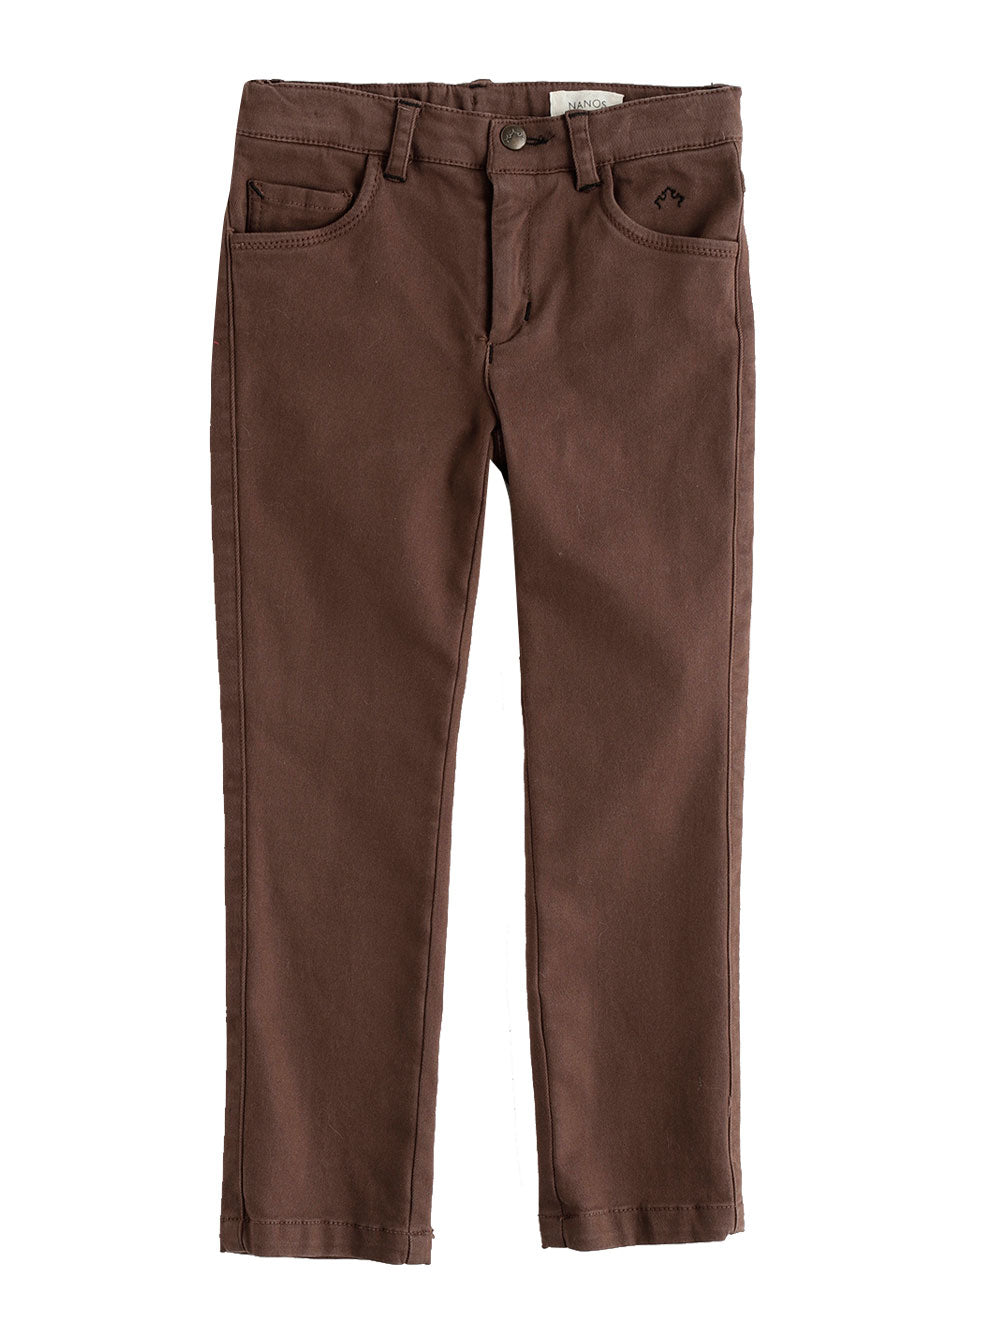 Brown Straight Pants